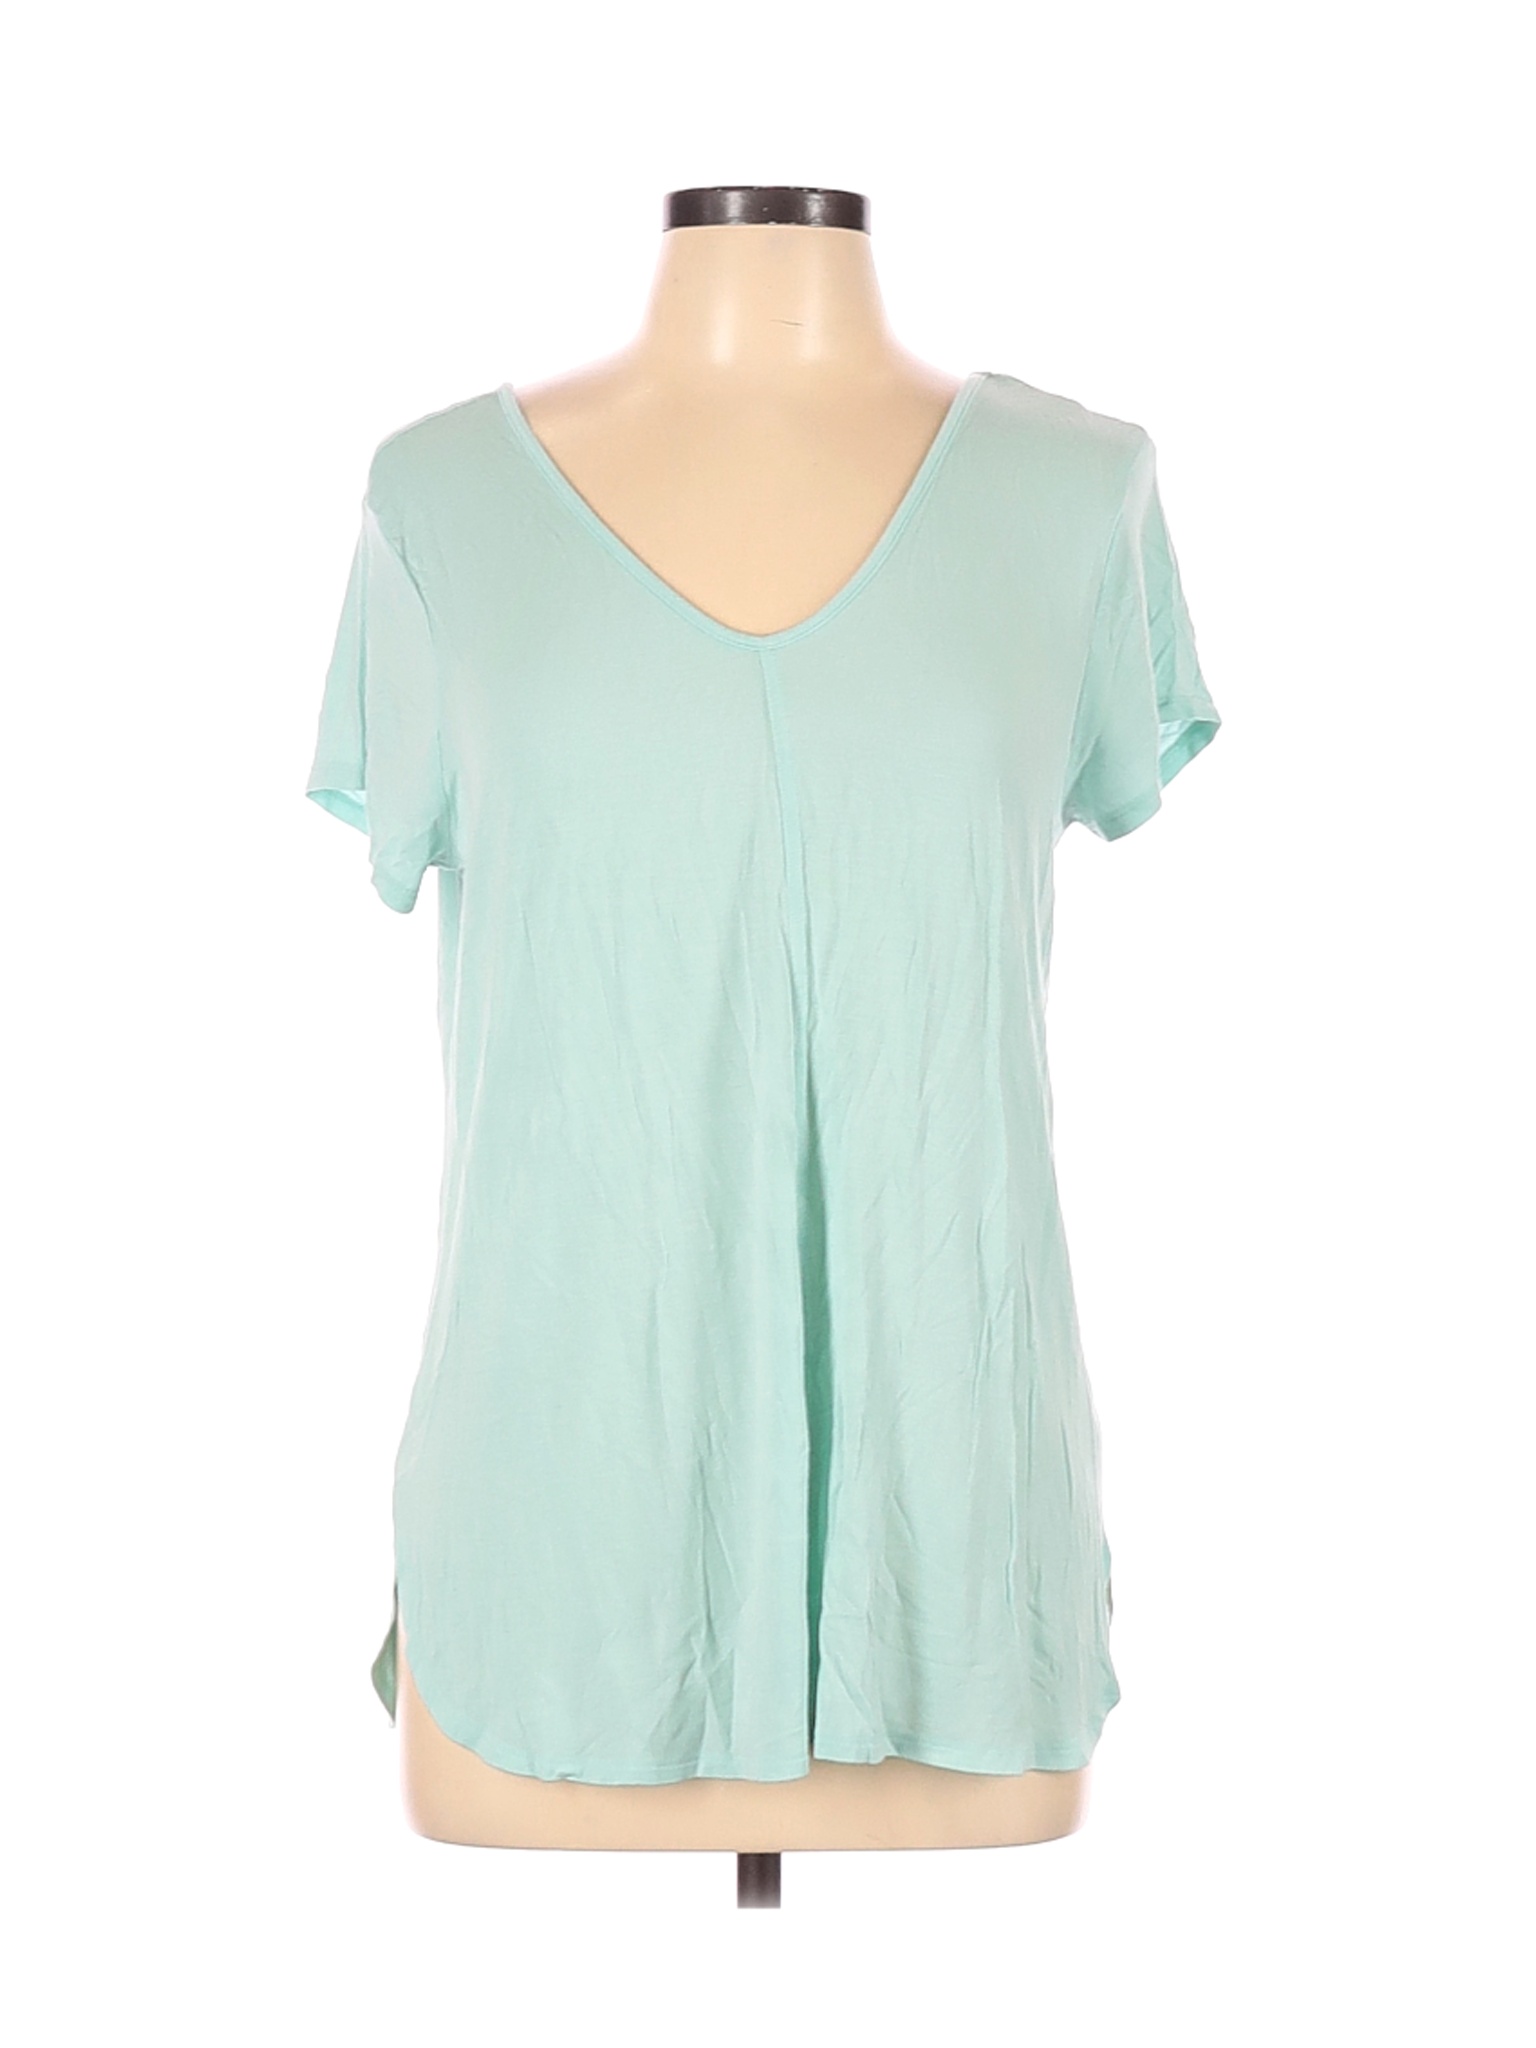 Cupio Solid Green Short Sleeve T-Shirt Size L - 70% off | thredUP